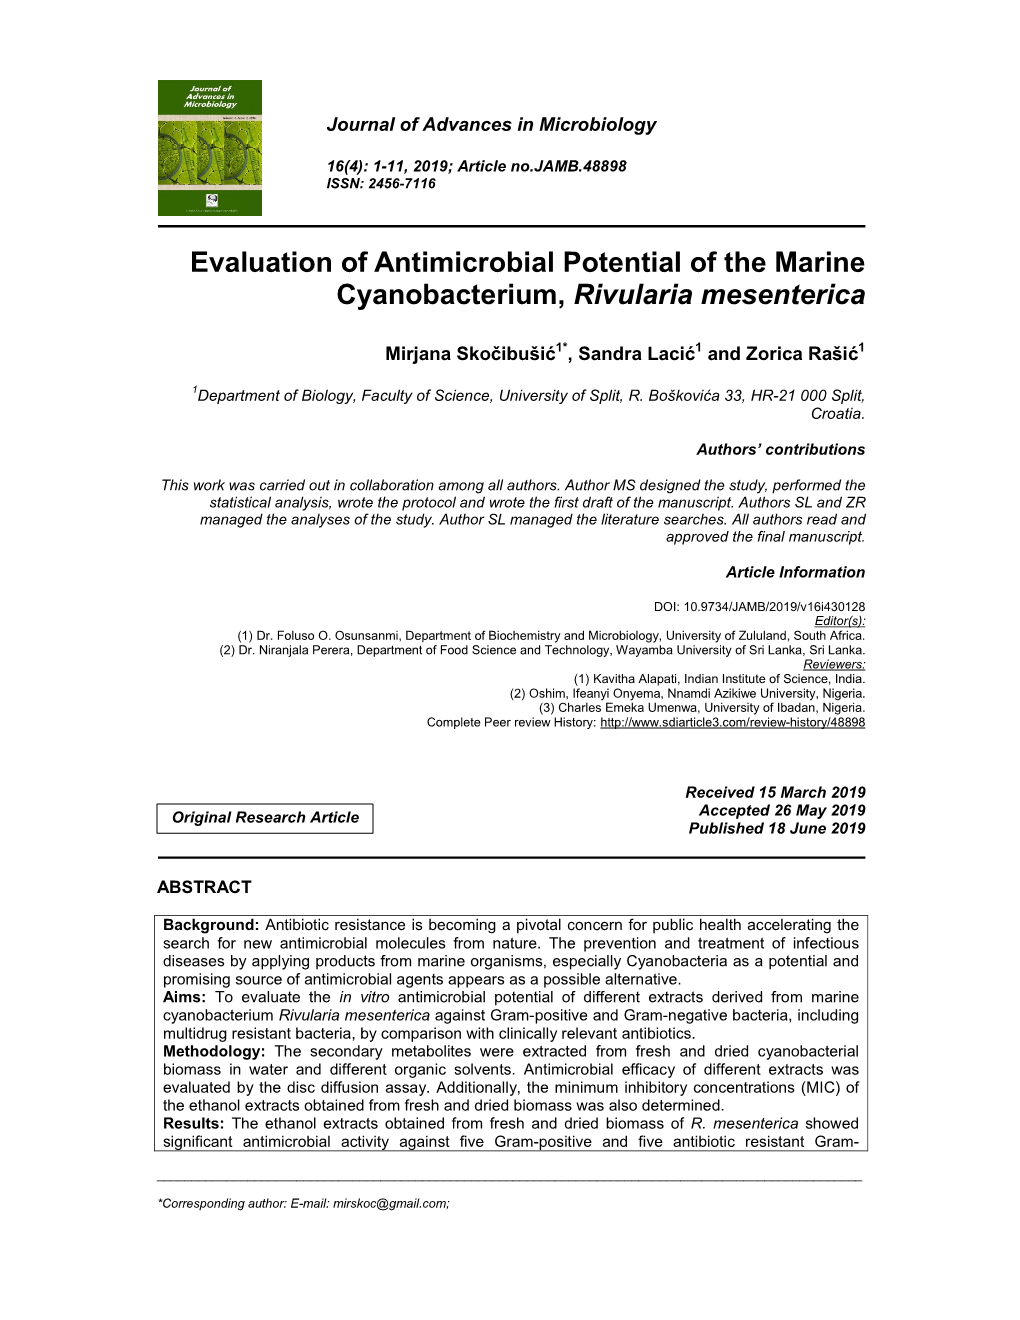 Evaluation of Antimicrobial Potential of the Marine Cyanobacterium, Rivularia Mesenterica